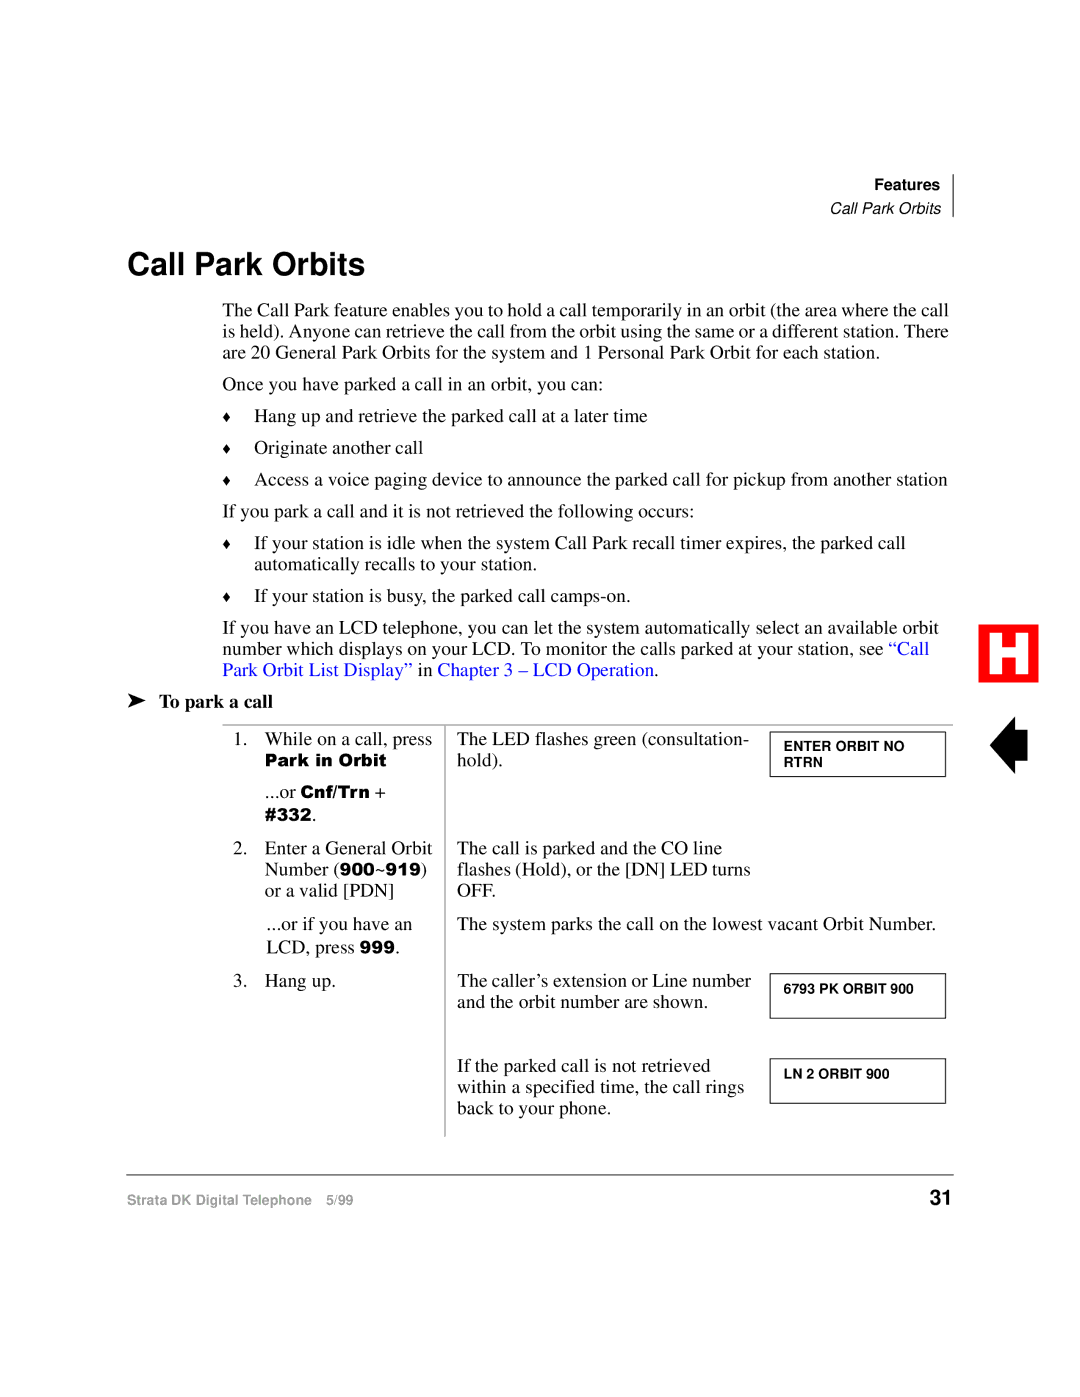 Toshiba Digital Telephone manual Call Park Orbits, To park a call 